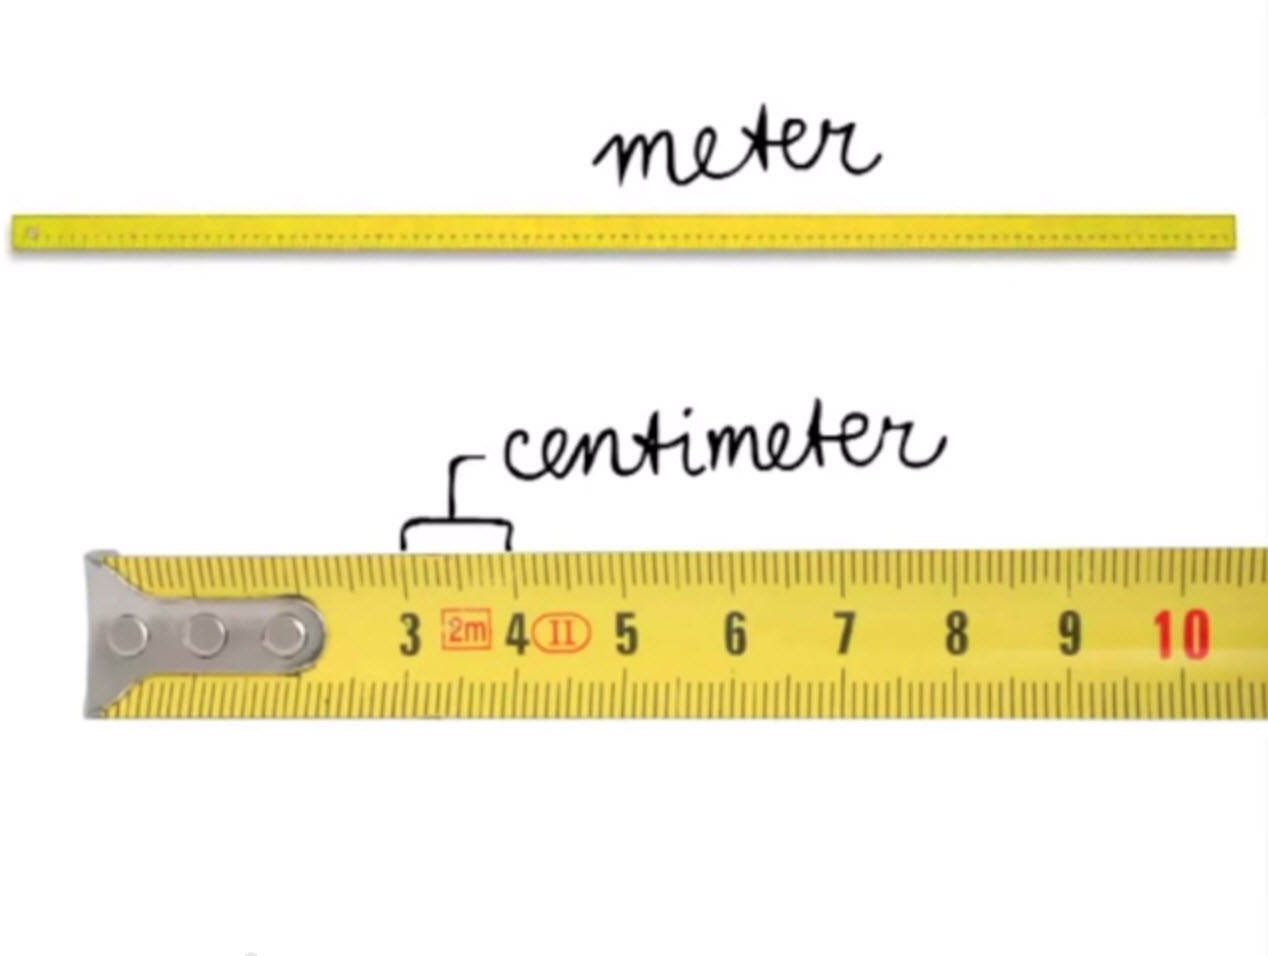 Centimeter to meter